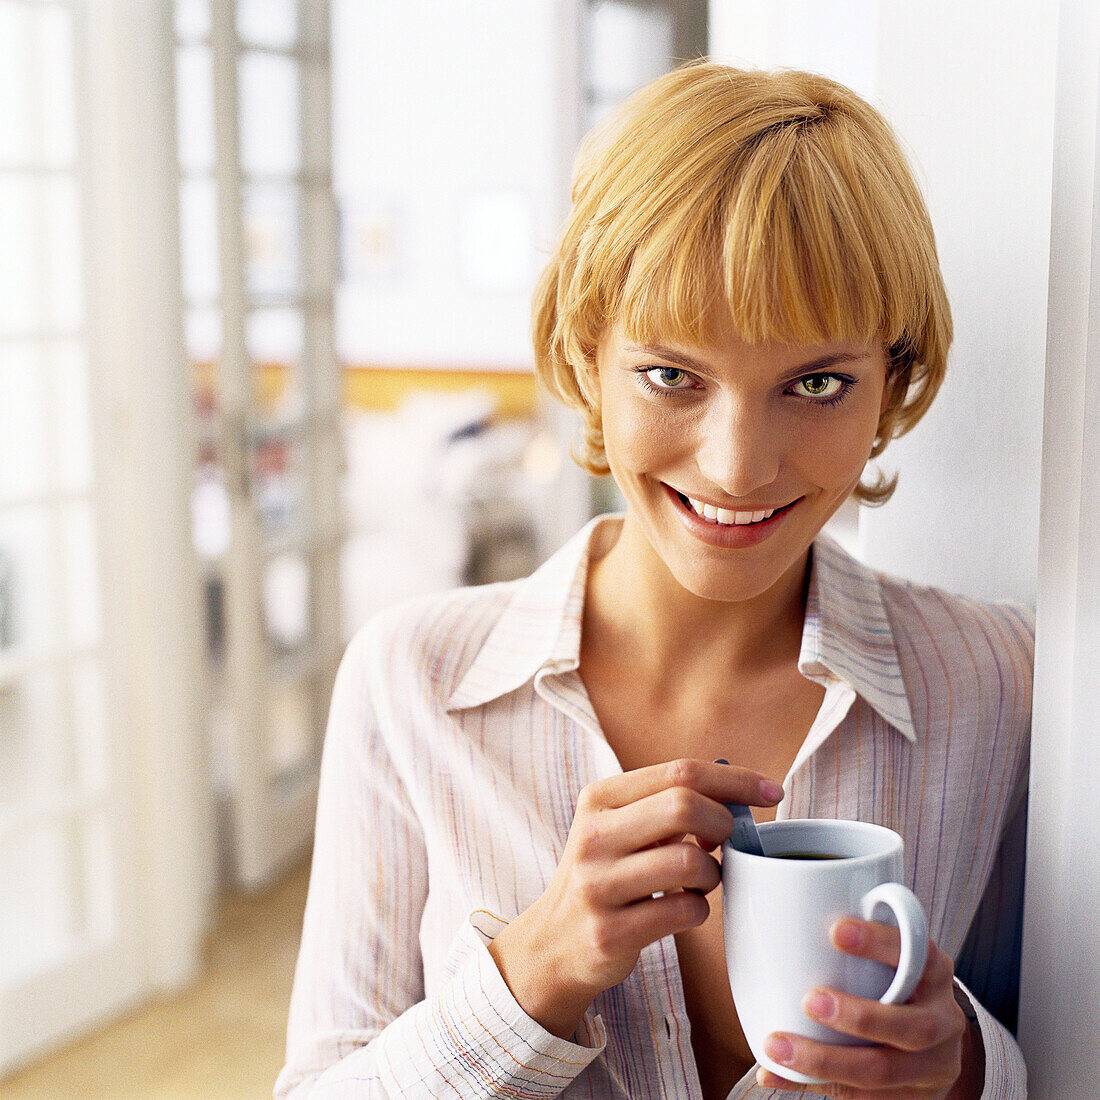 Teen girl leaning against wall, holding mug, portrait